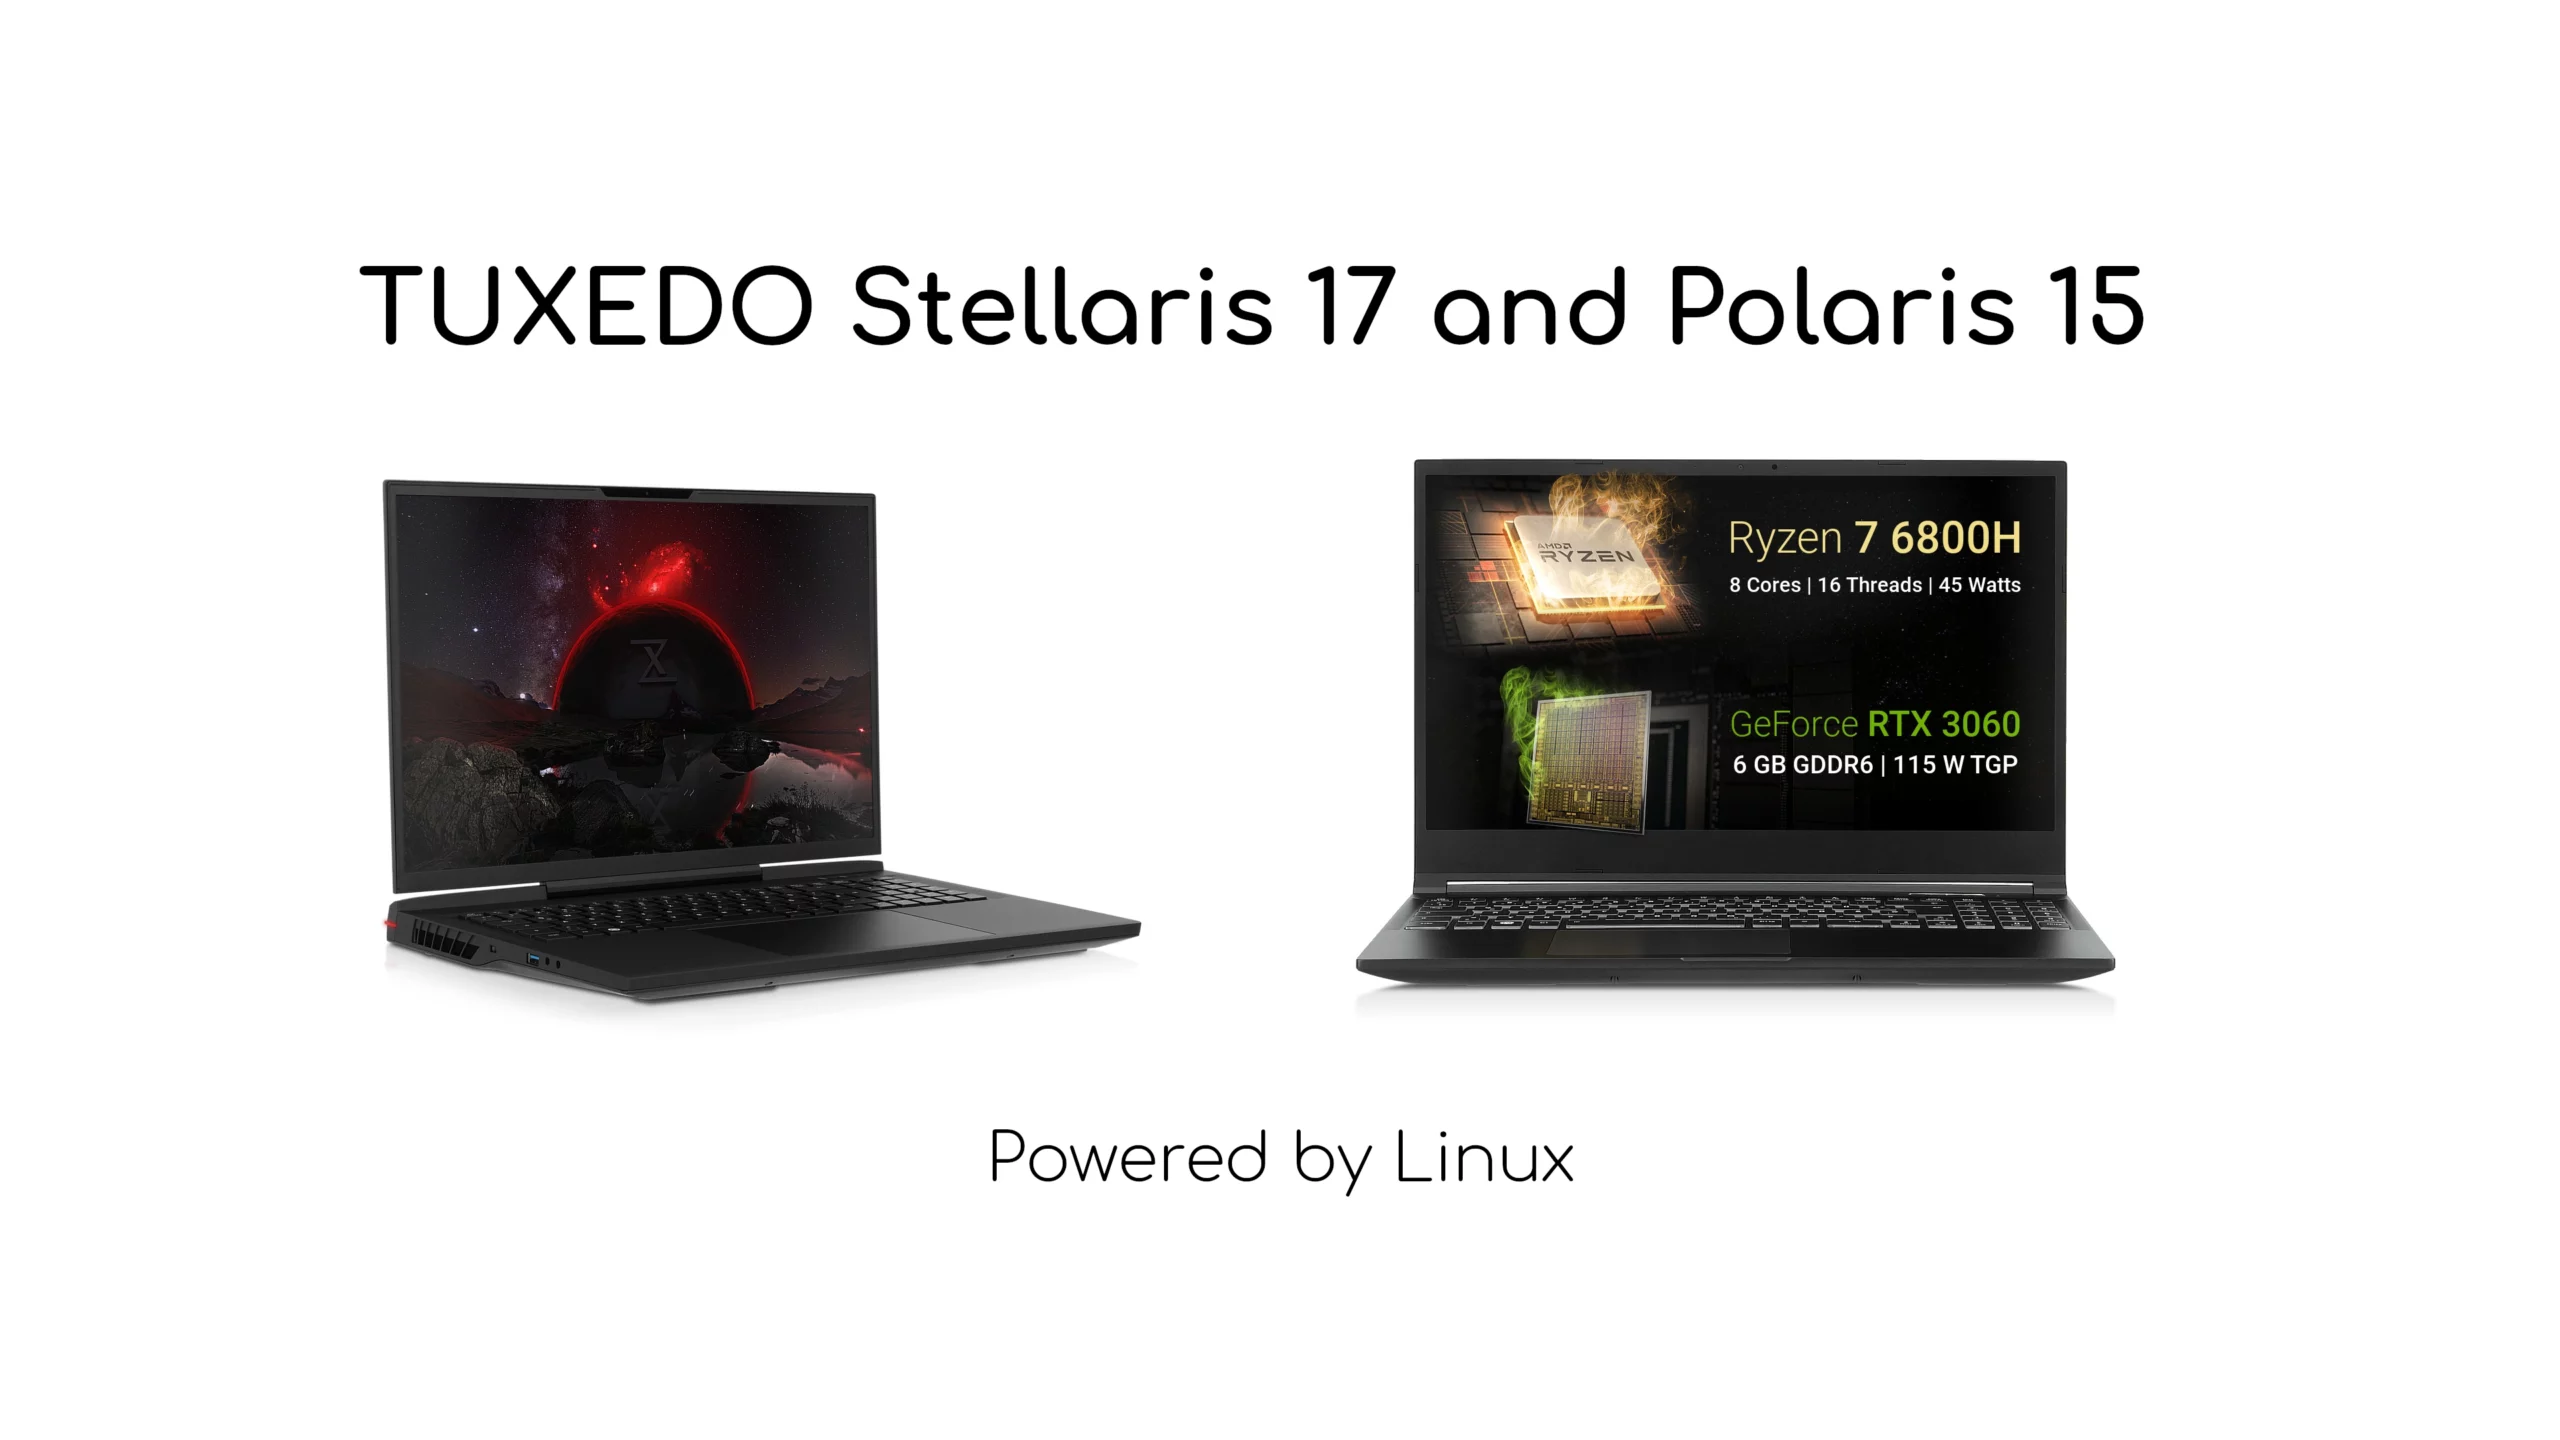 TUXEDO Stellaris 17 and Polaris 15 Linux Gaming Laptops Get High-End NVIDIA GPUs